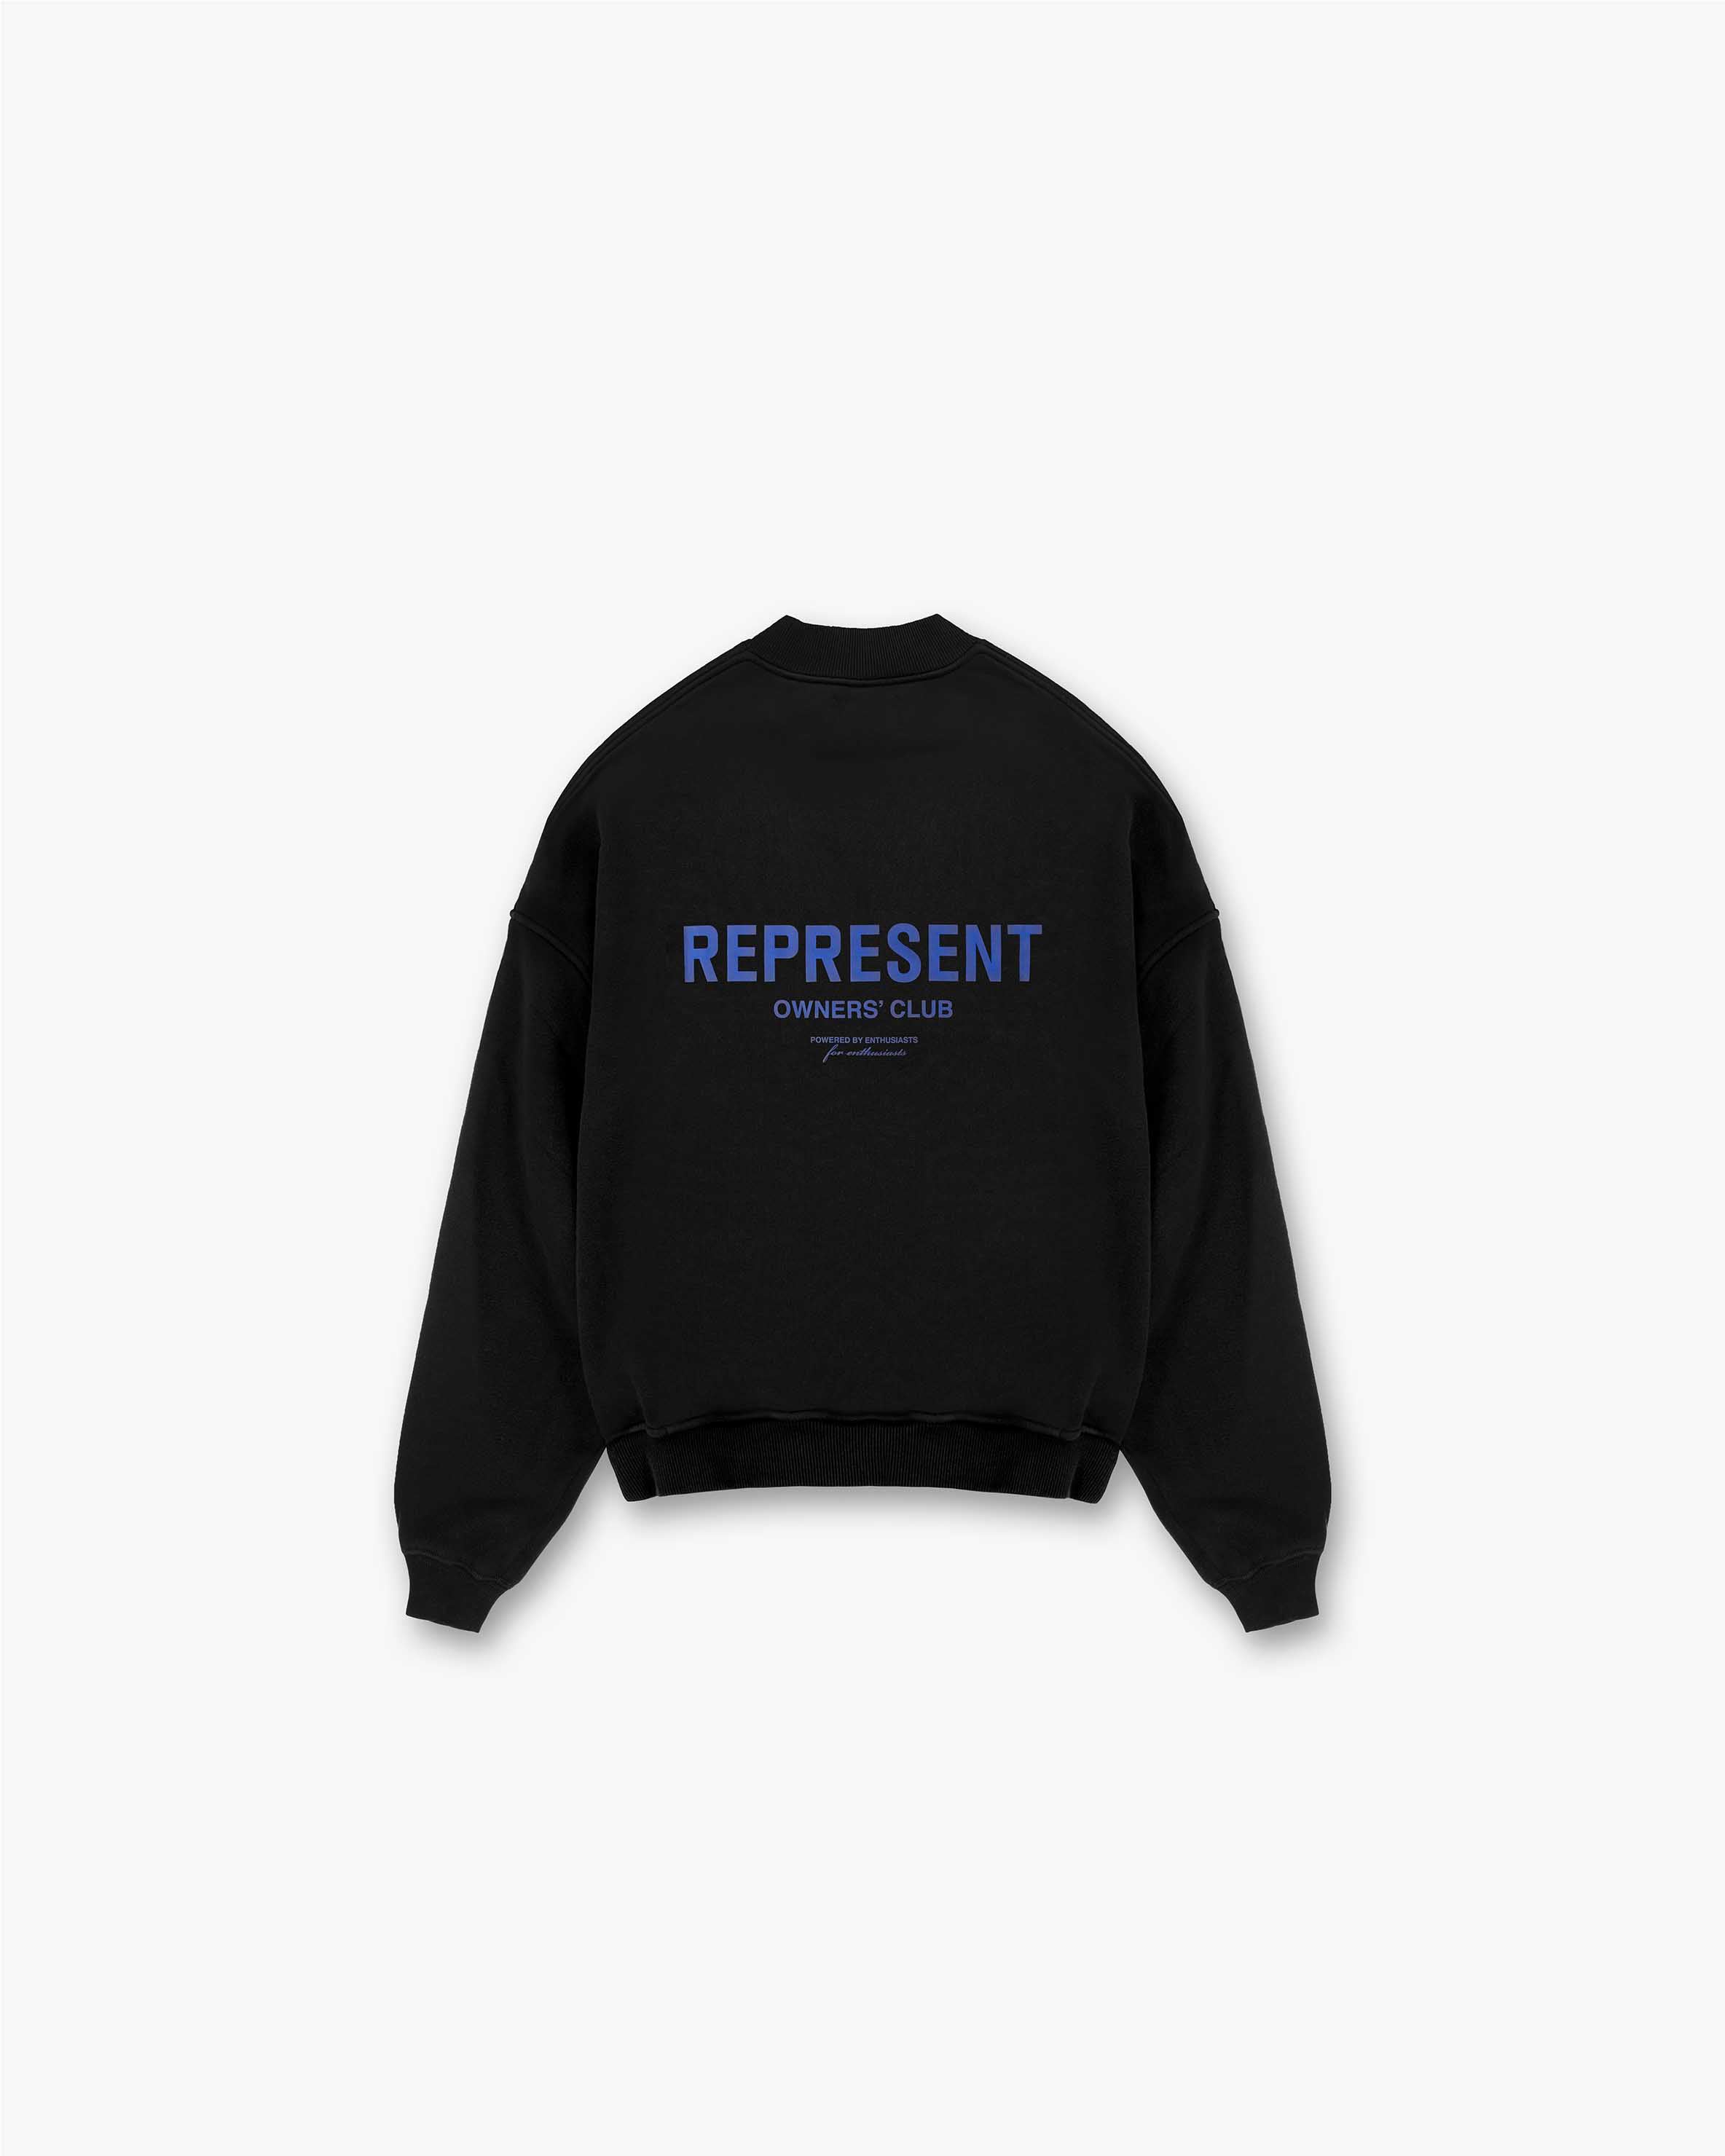 Represent Owners Club Sweater - Black Cobalt